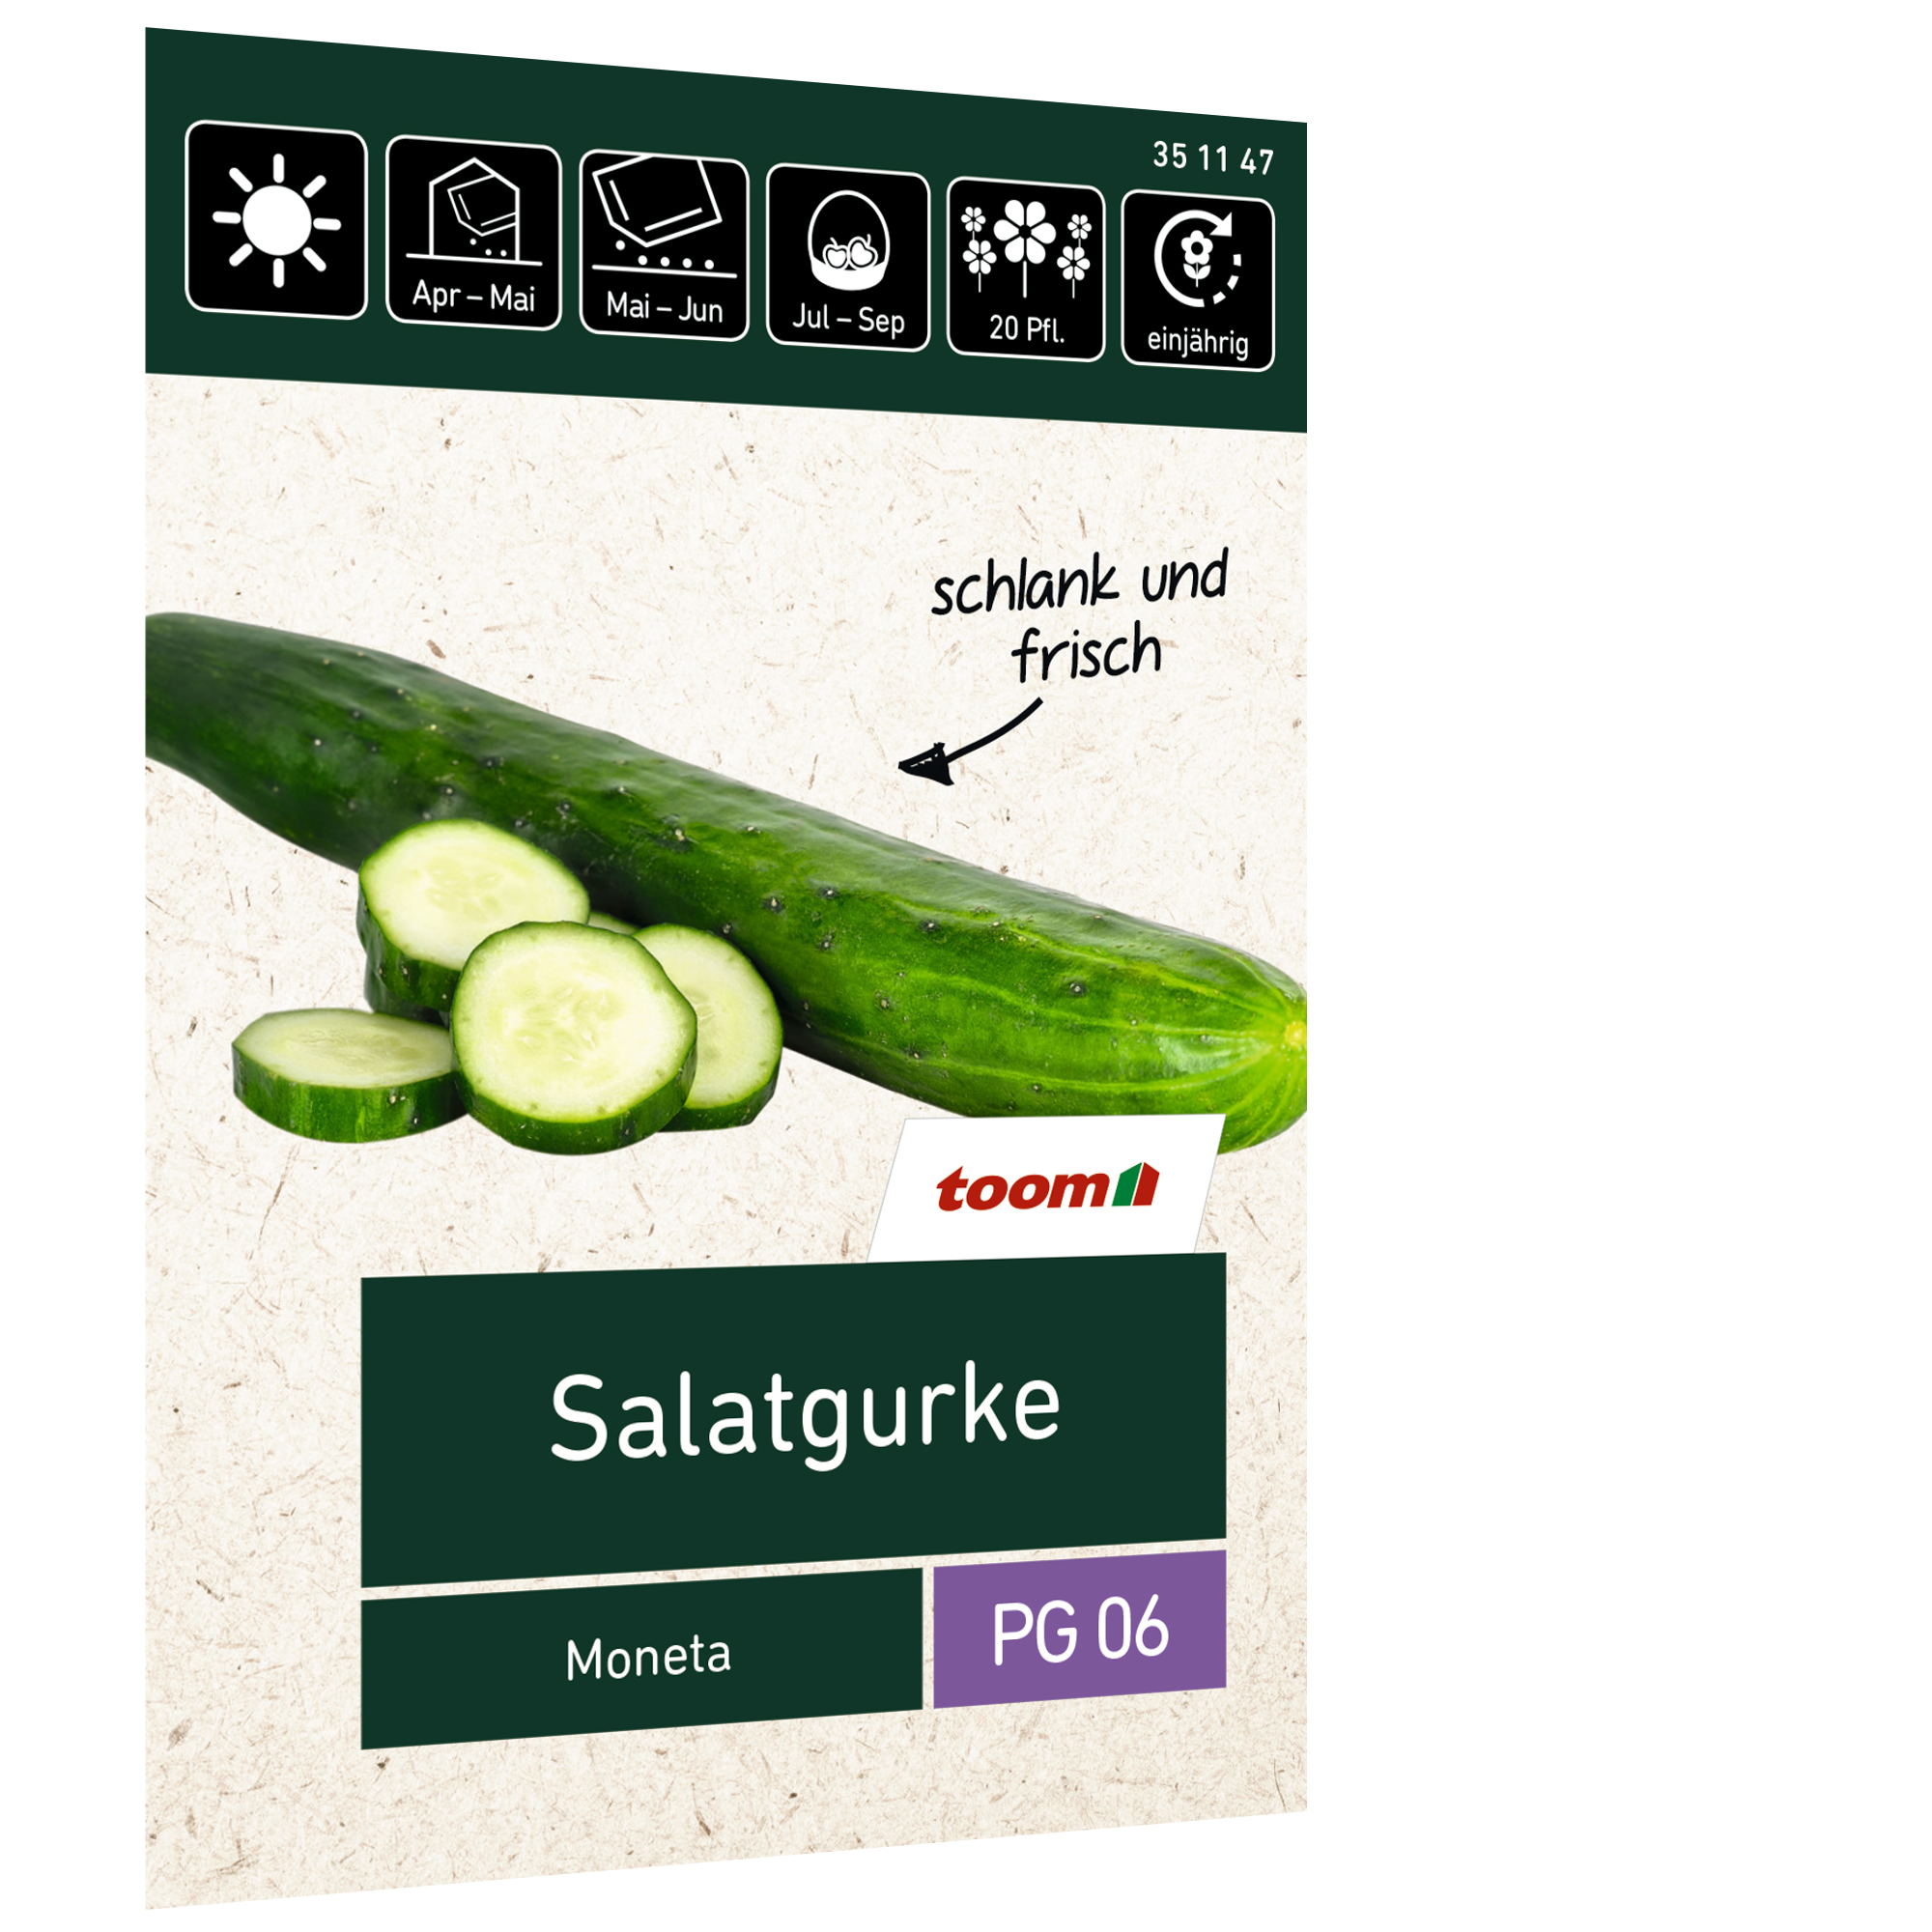 Salatgurke 'Moneta' + product picture